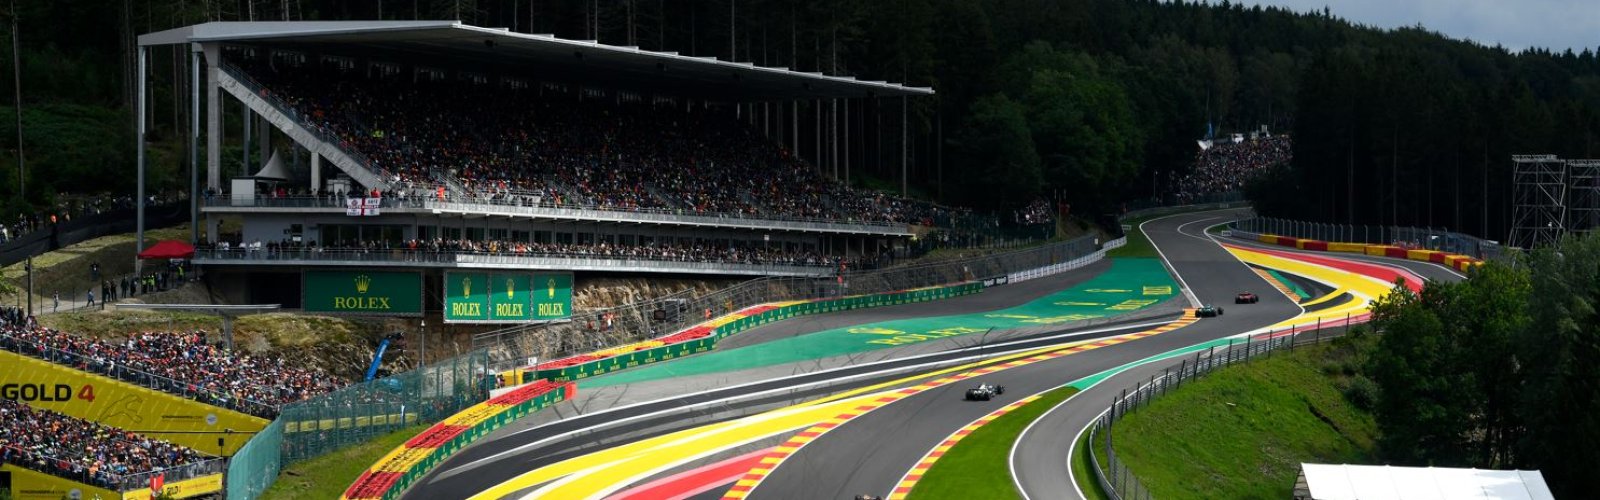 Belgian Formula 1 Grand Prix travel & ticket packages image